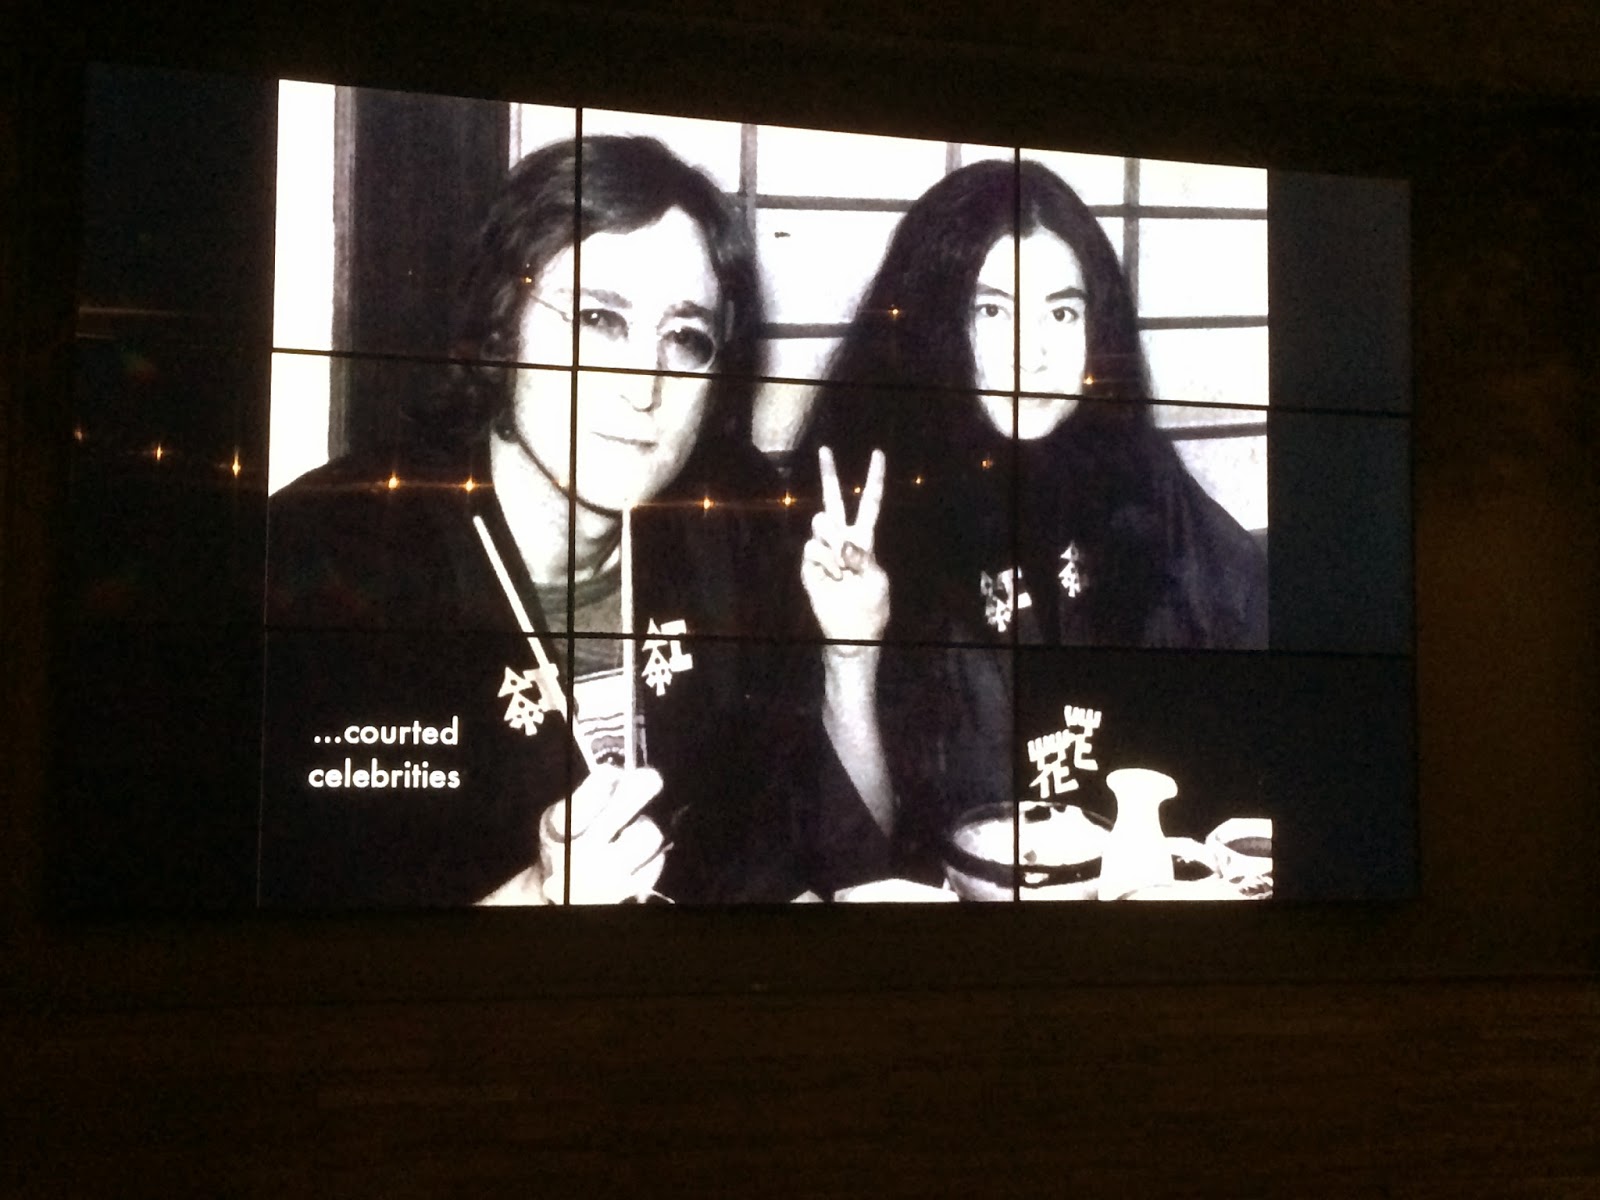 John Lennon and Yoko Ono at Benihana